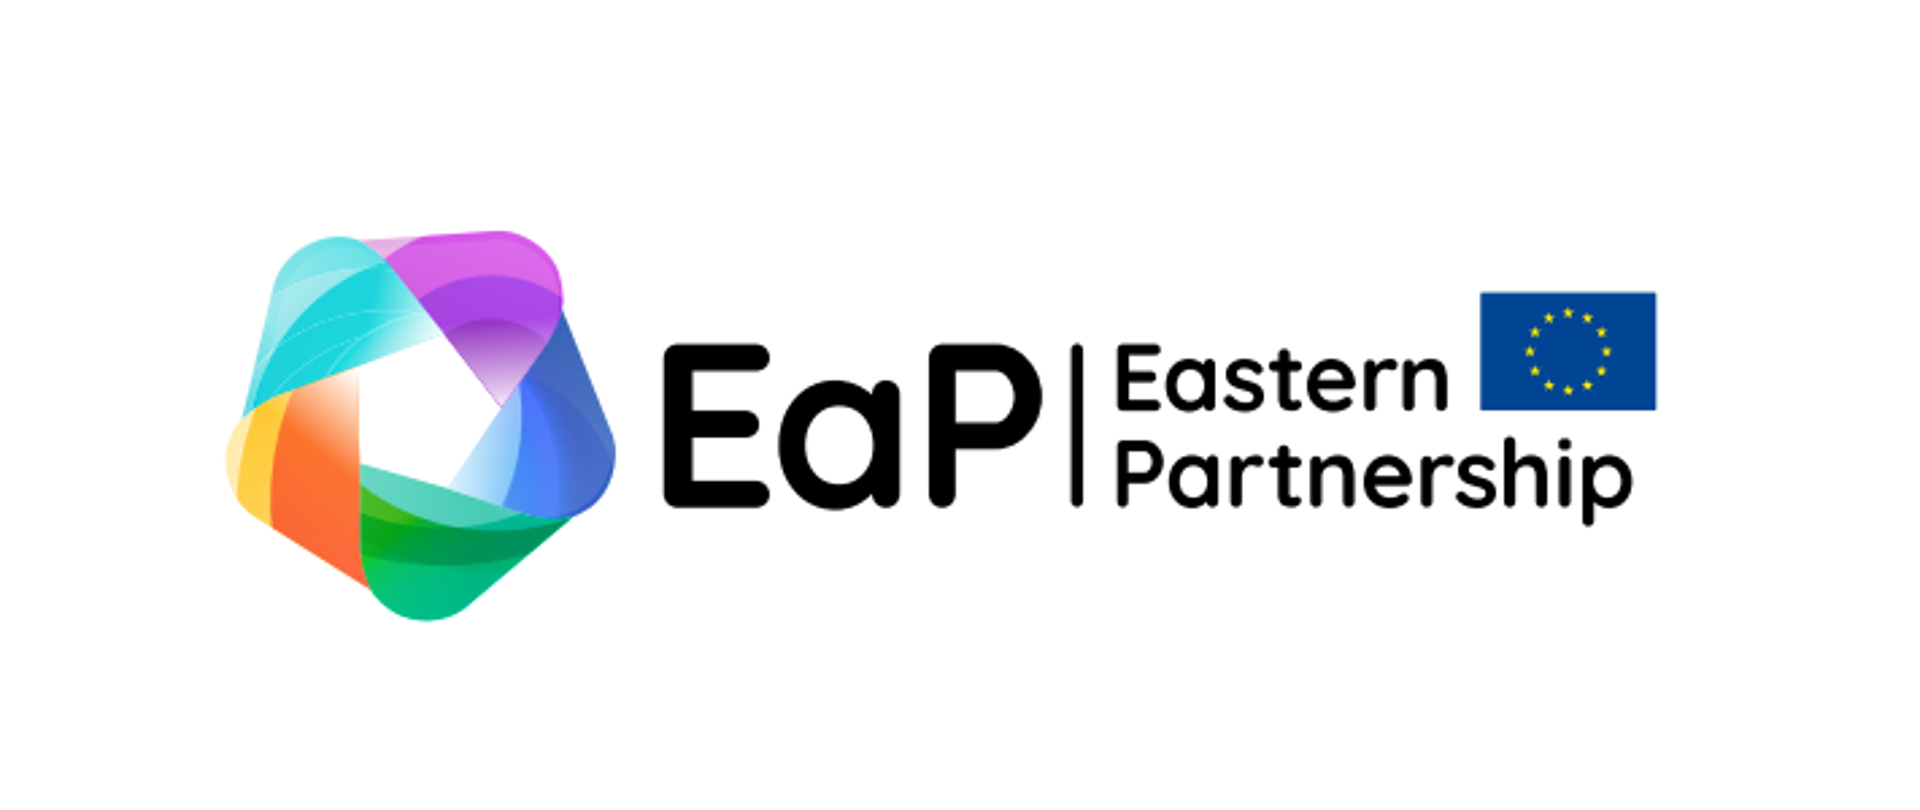 Eastern Partnership